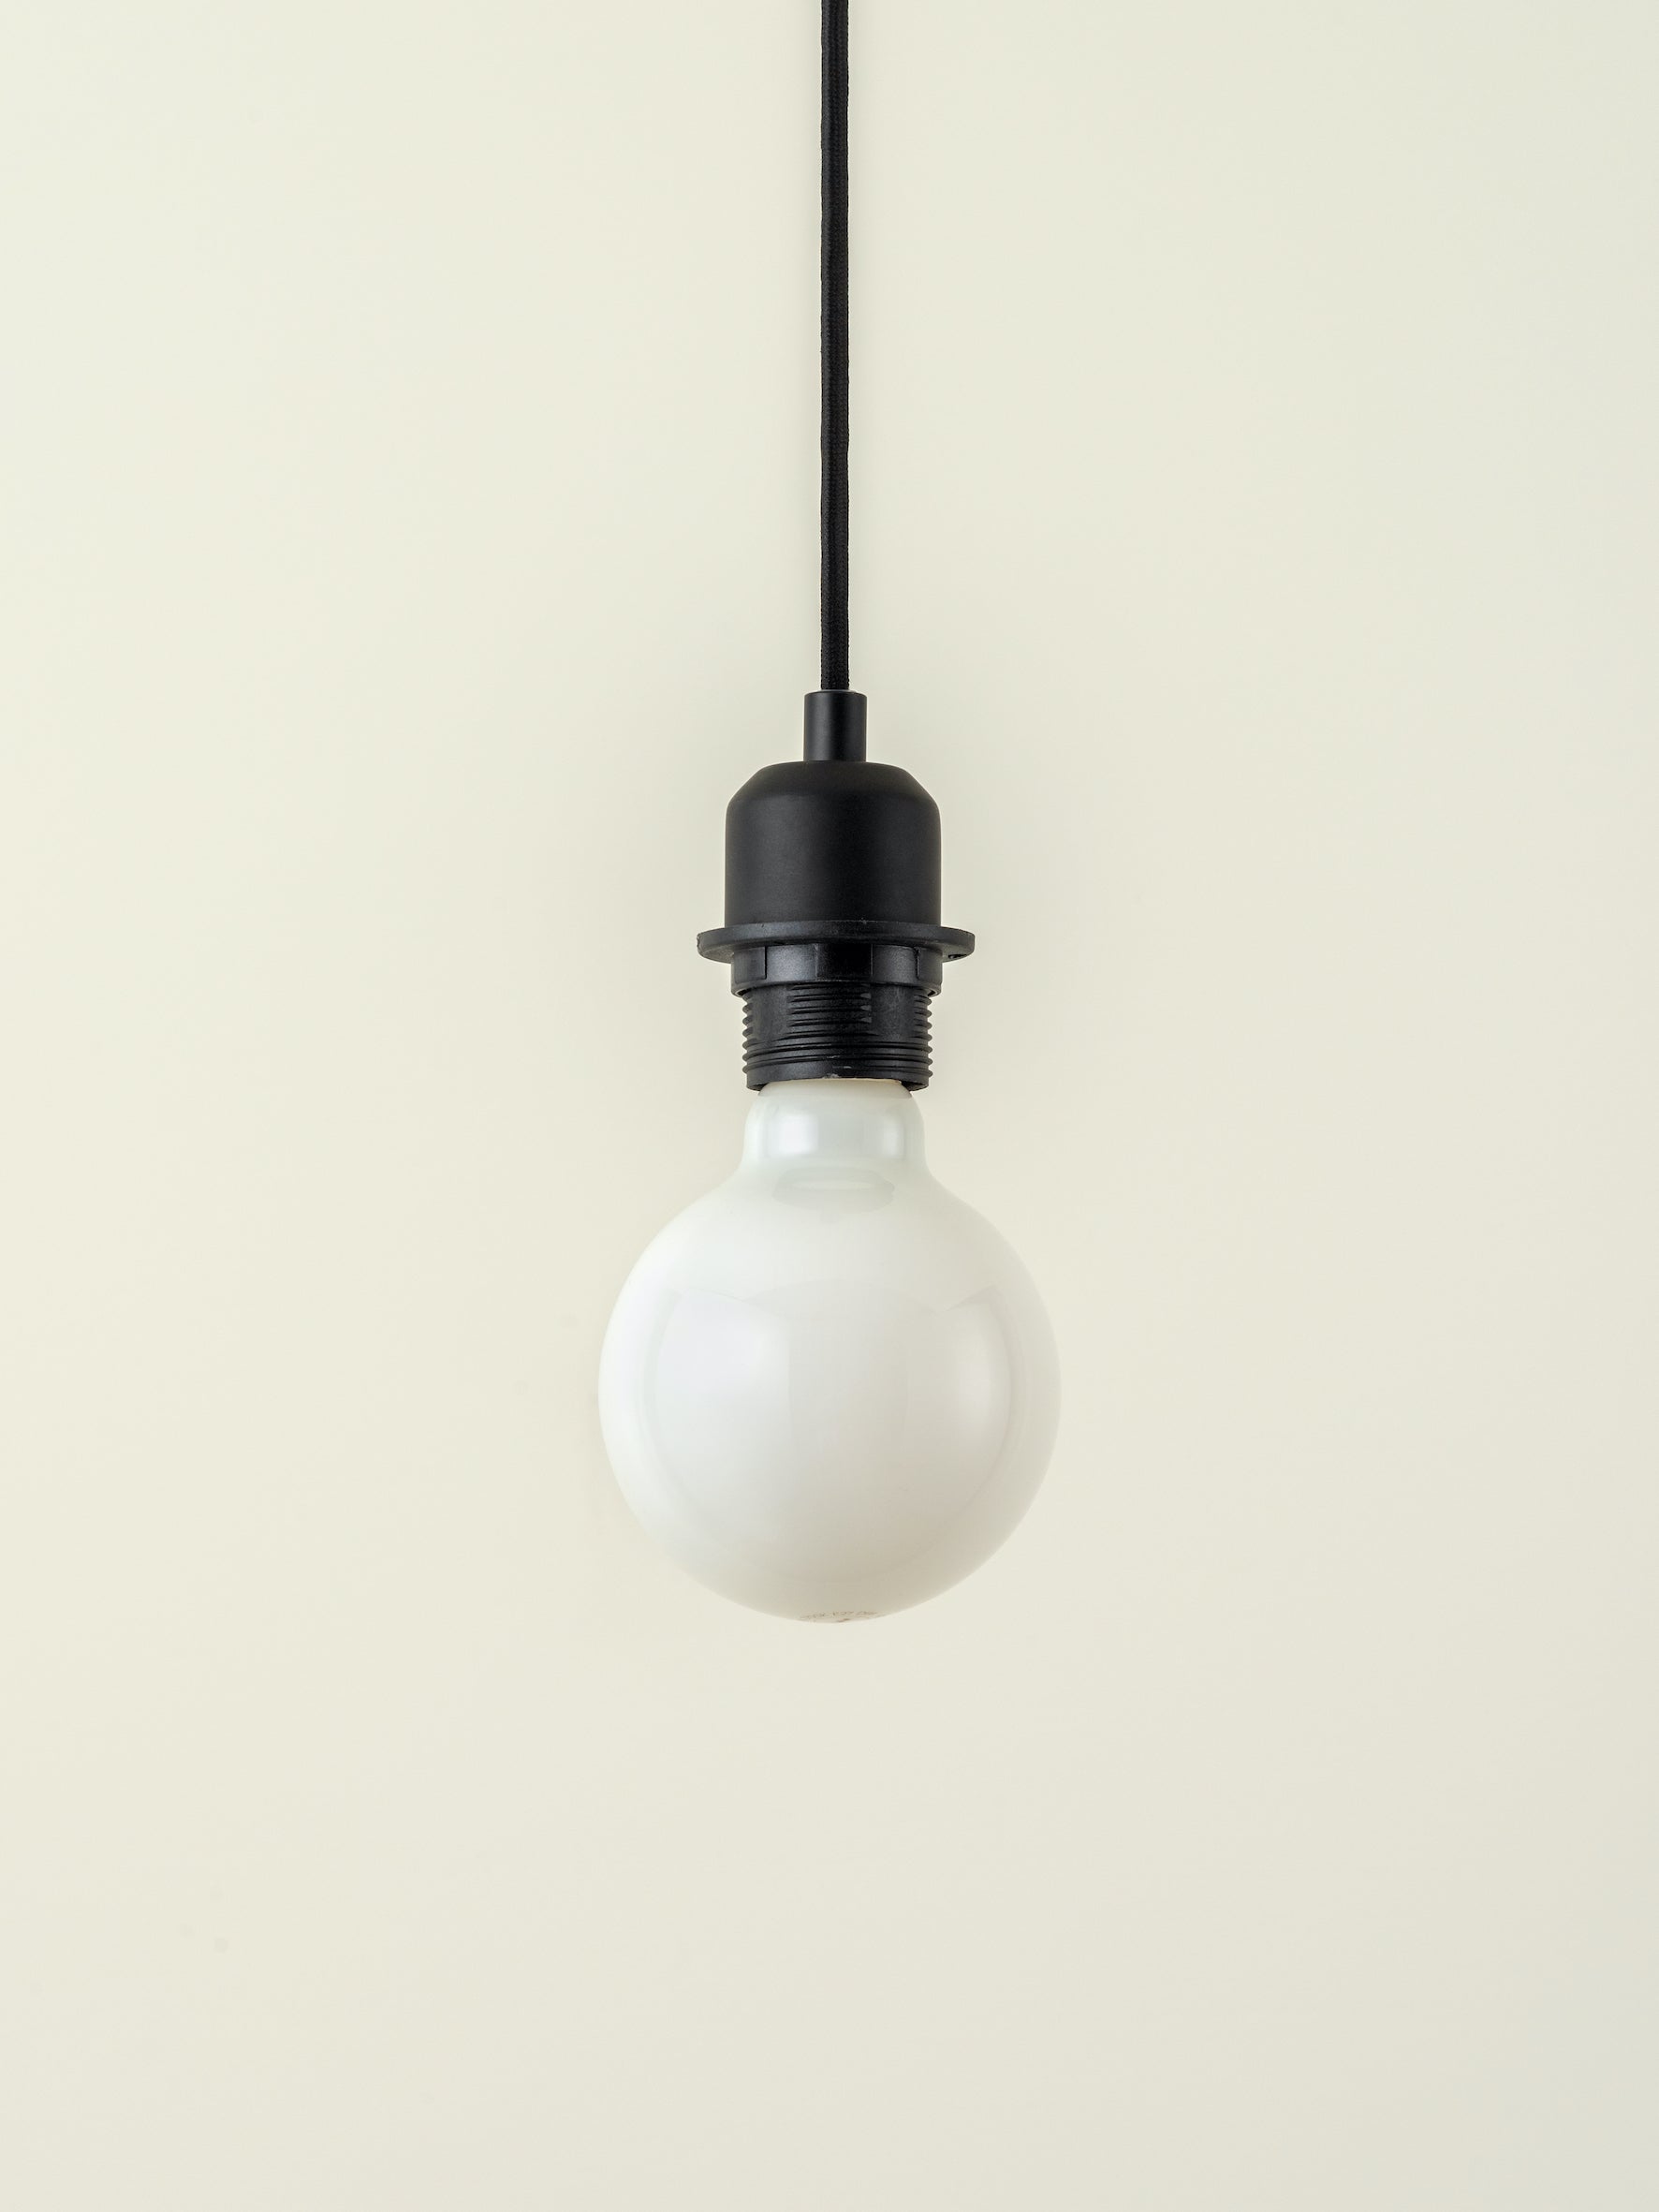 Capel - 1 light matt black drop cap lampholder kit | Ceiling Light | Lights & Lamps | UK | Modern Affordable Designer Lighting